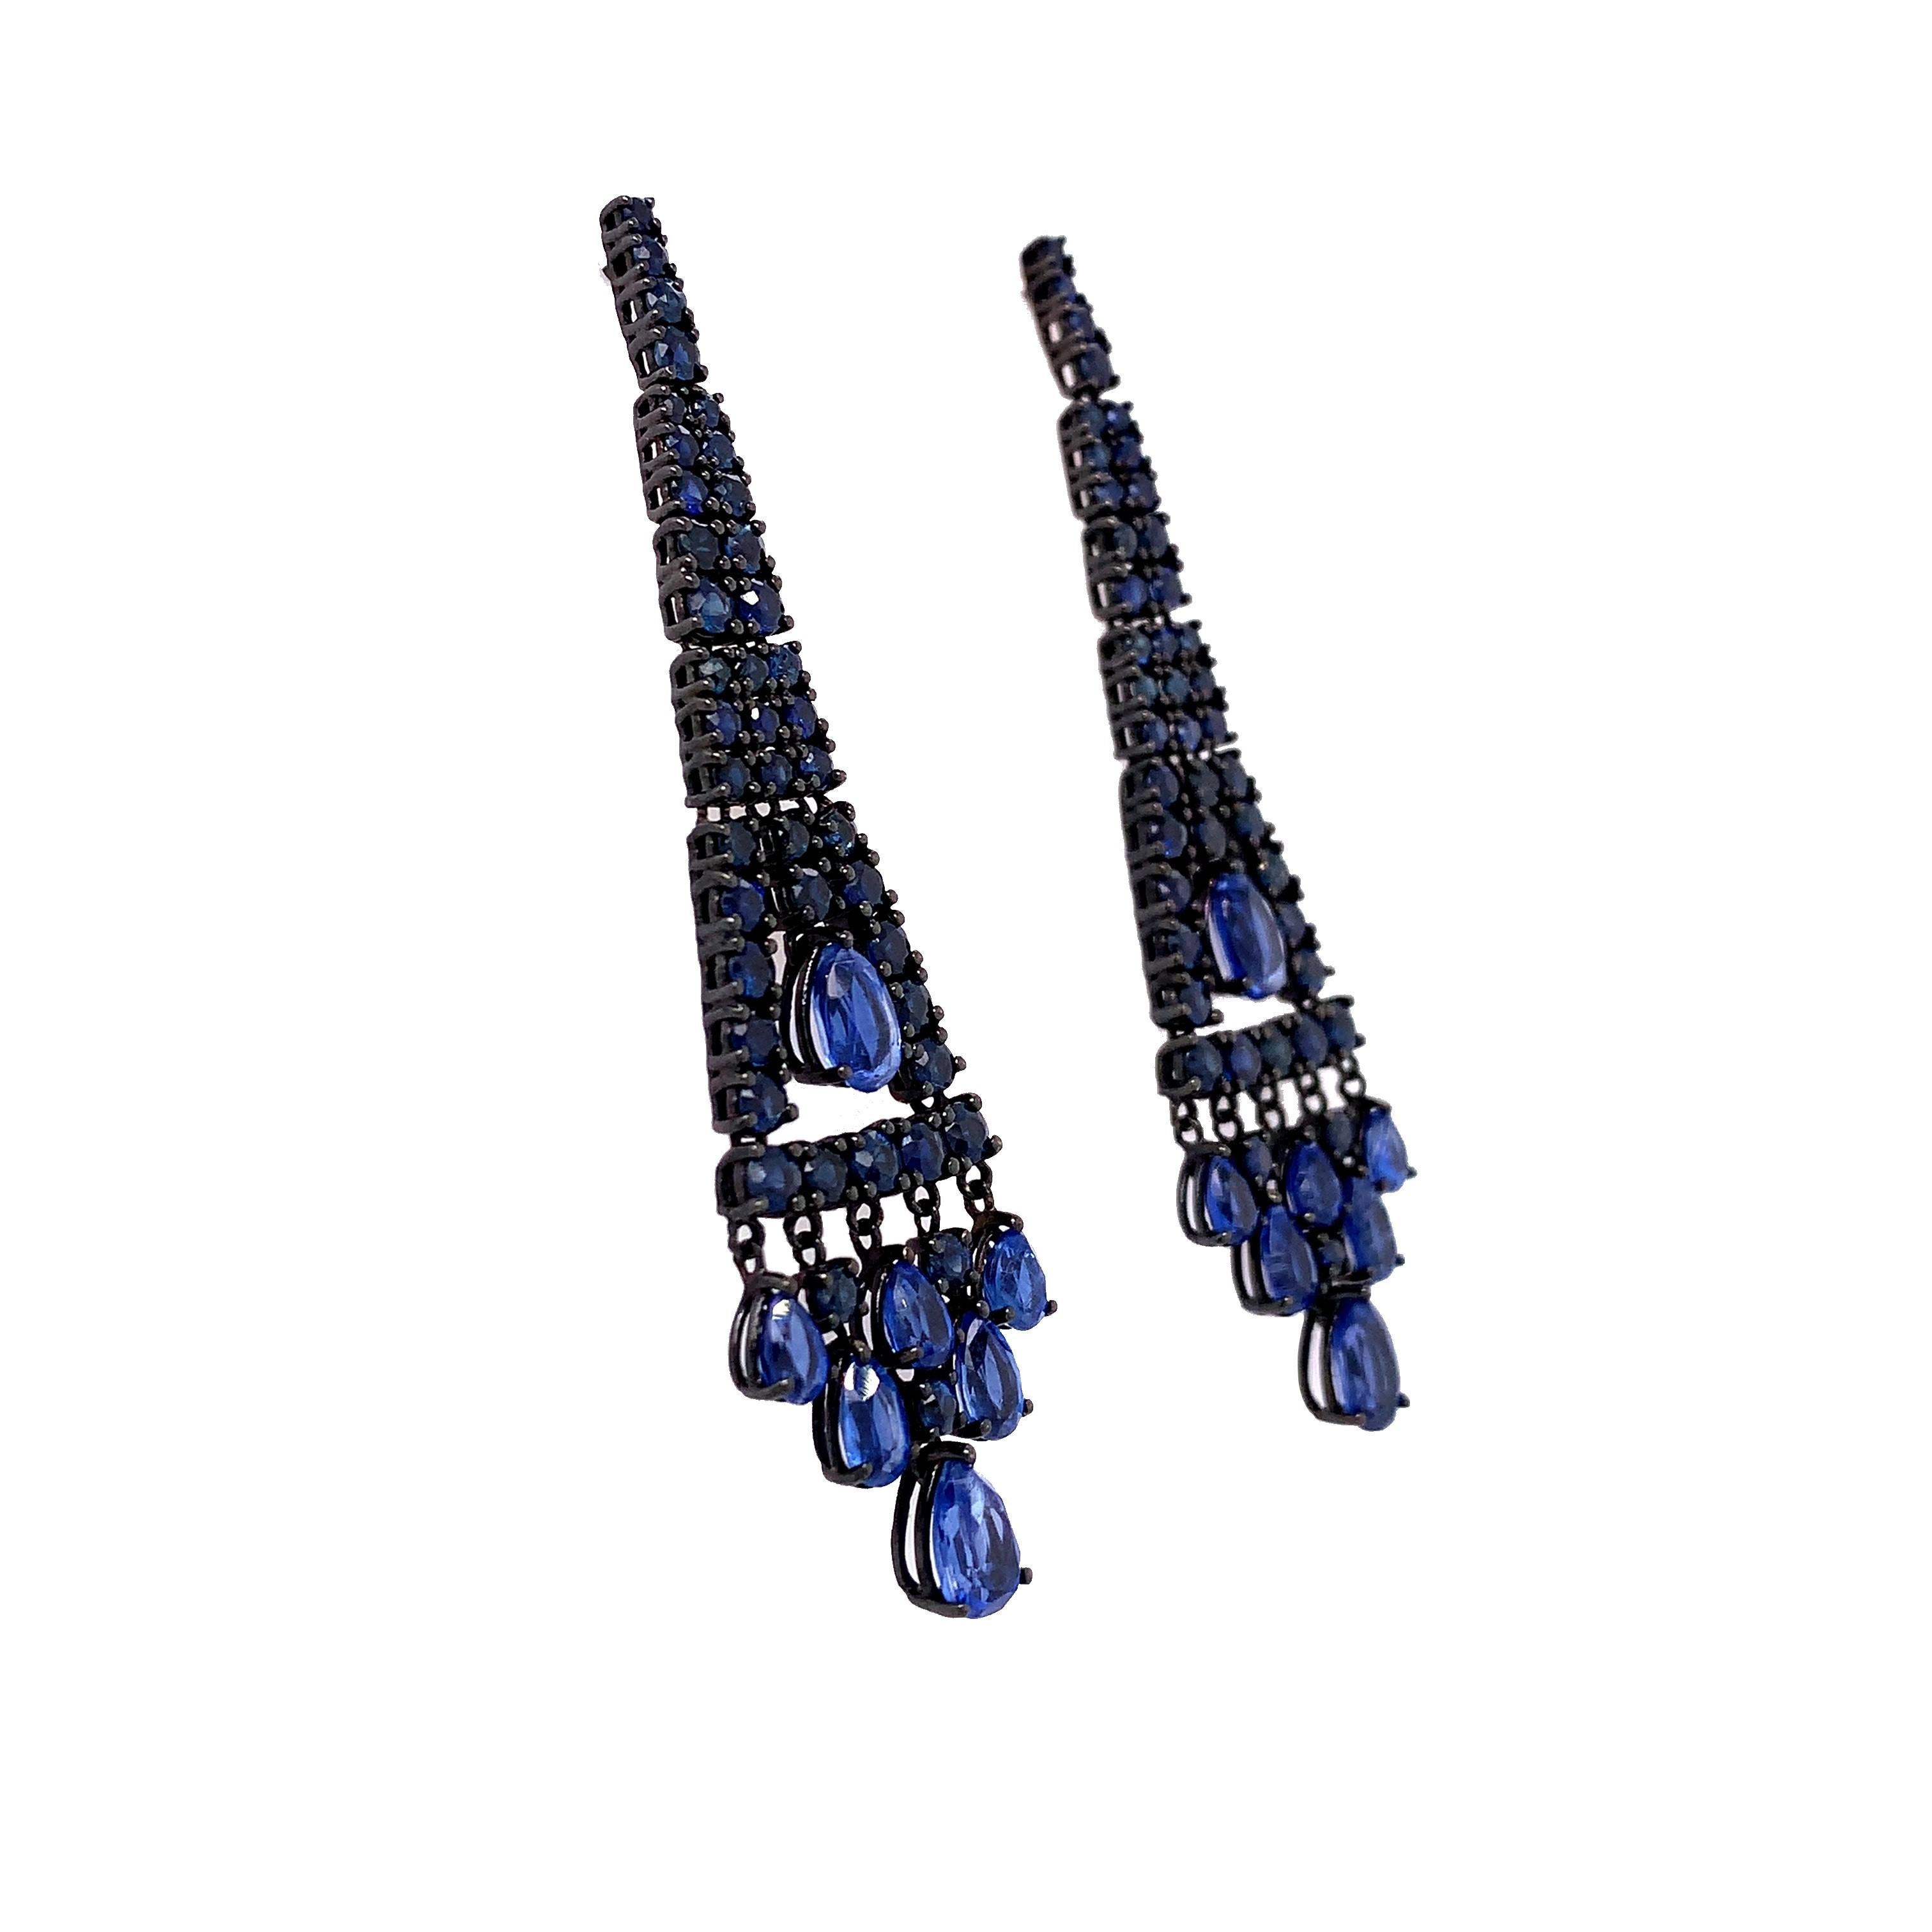 18K Tinted Black Rhodium
Blue Sapphire: 3.99 carats 
Kyanite: 4.46 carats 